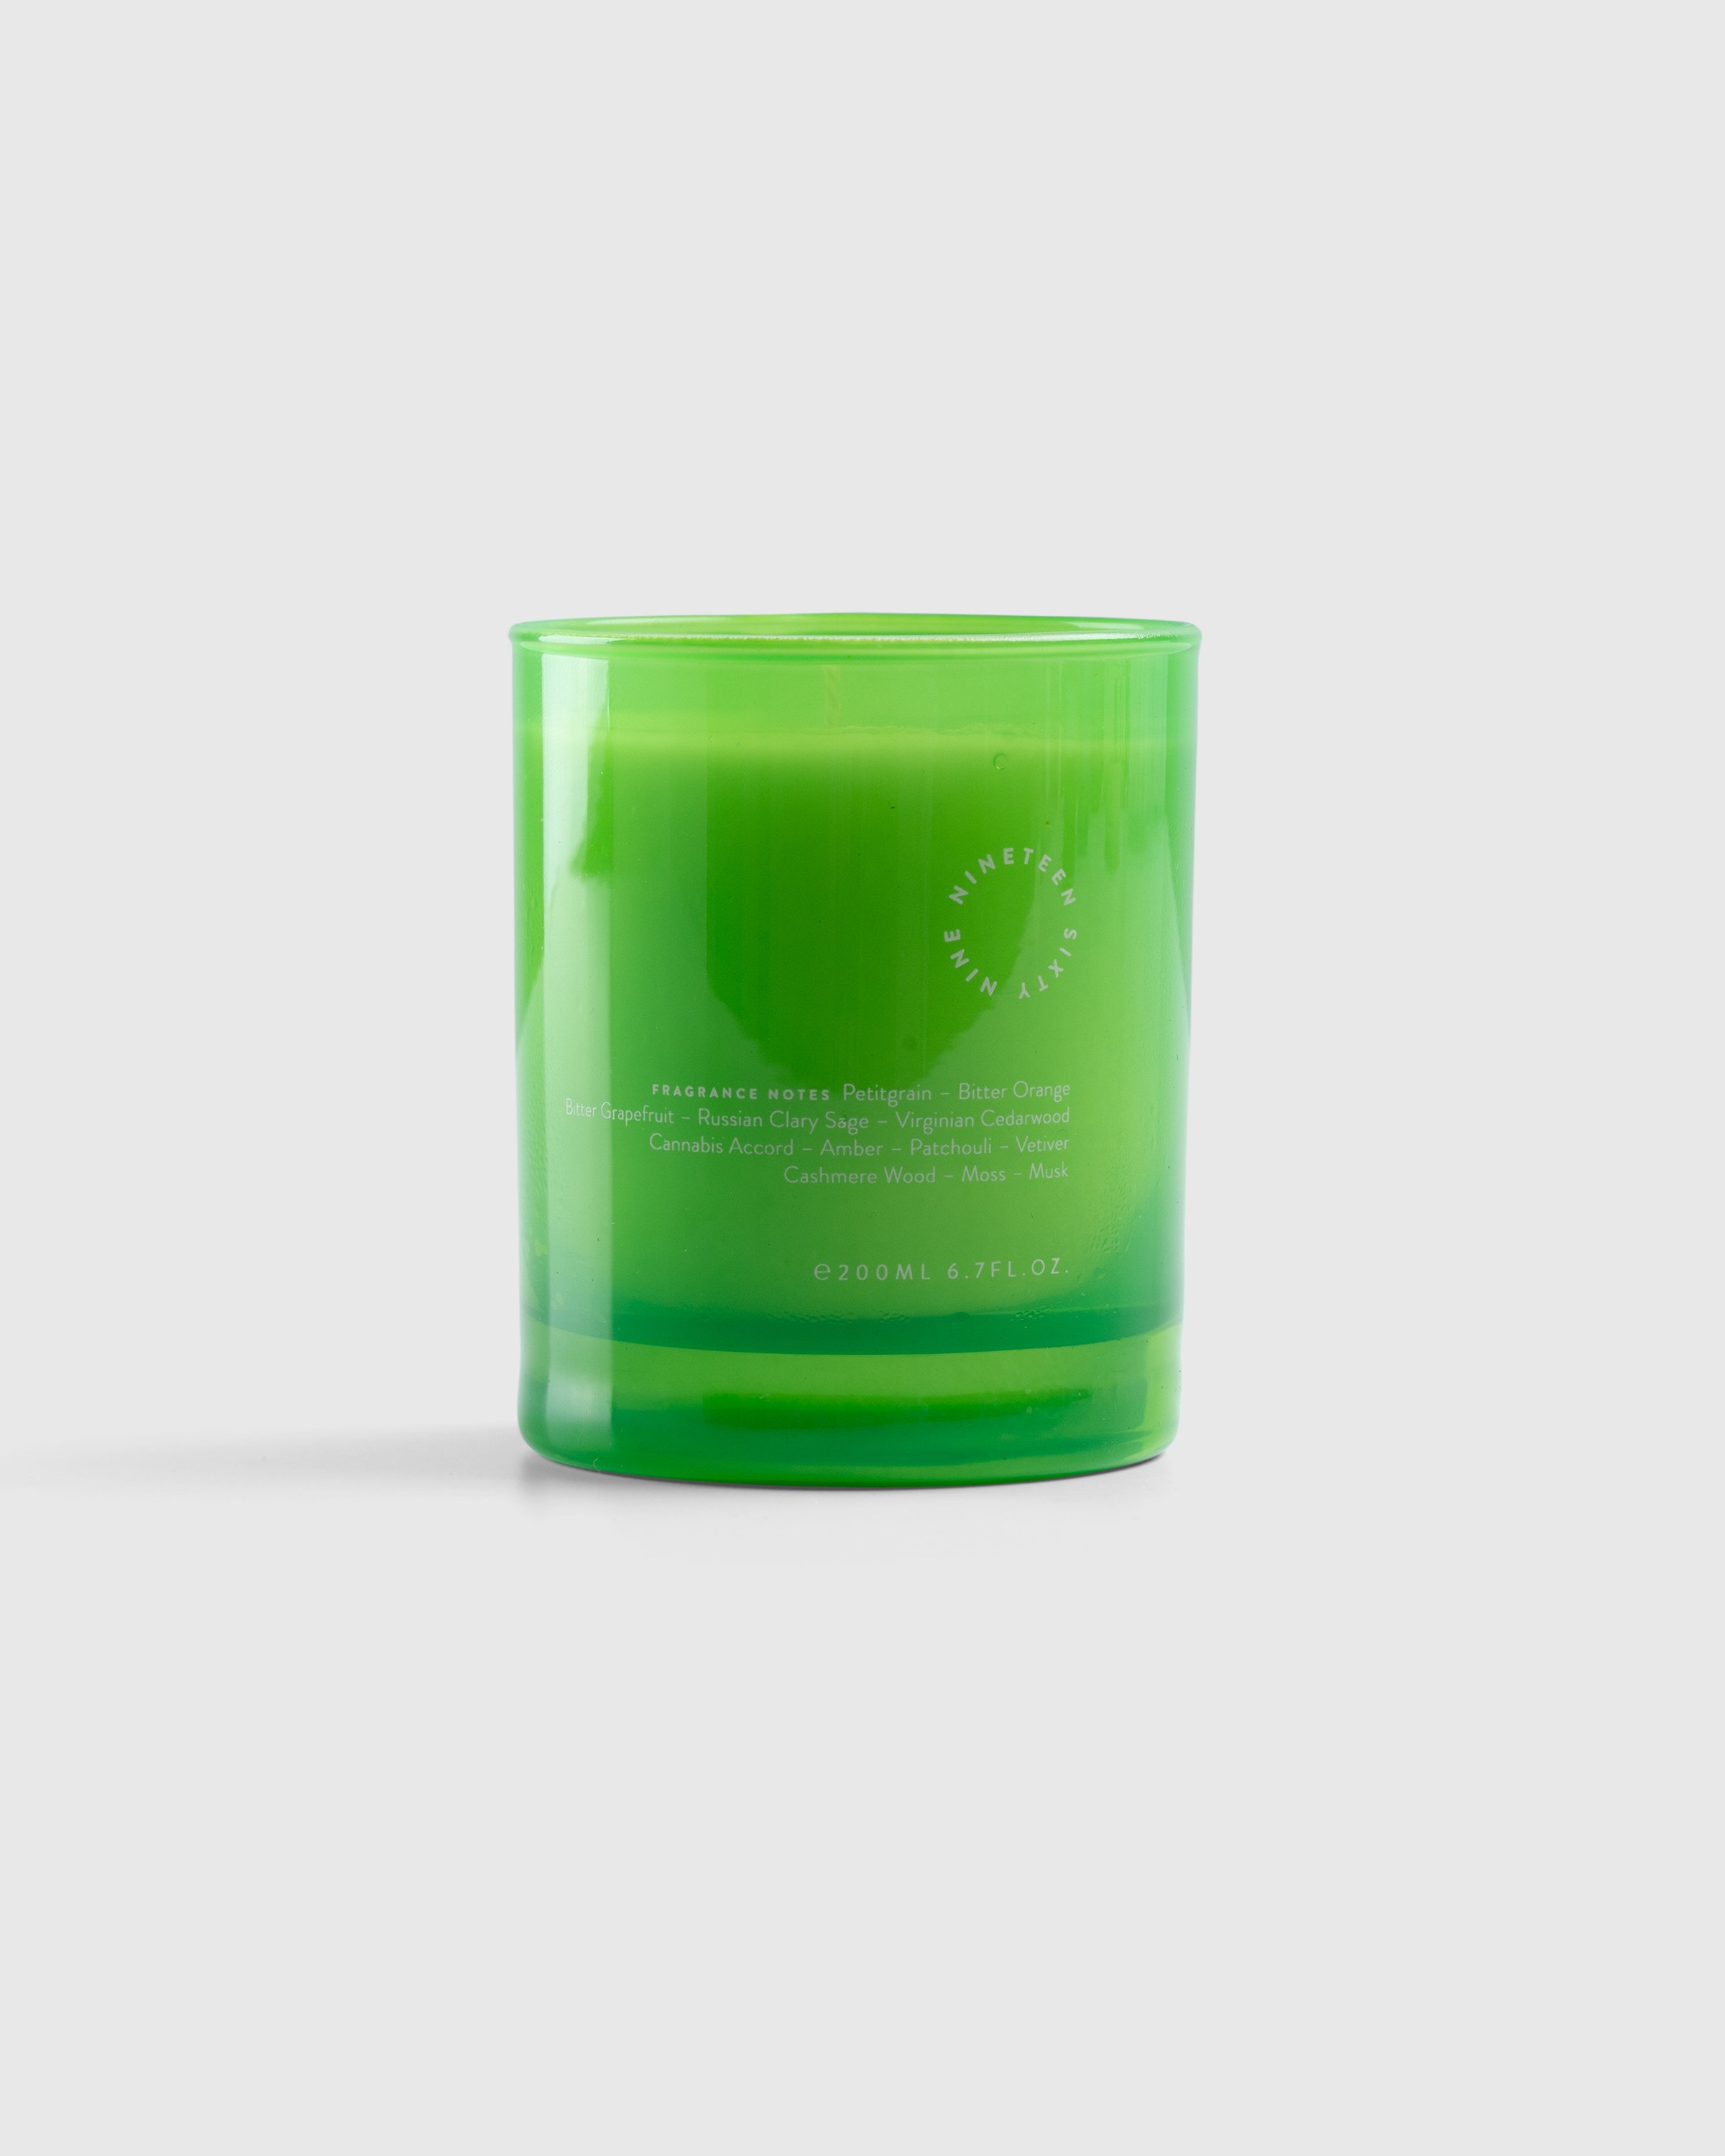 19-69 - Chronic BP Candle - Lifestyle - Green - Image 2